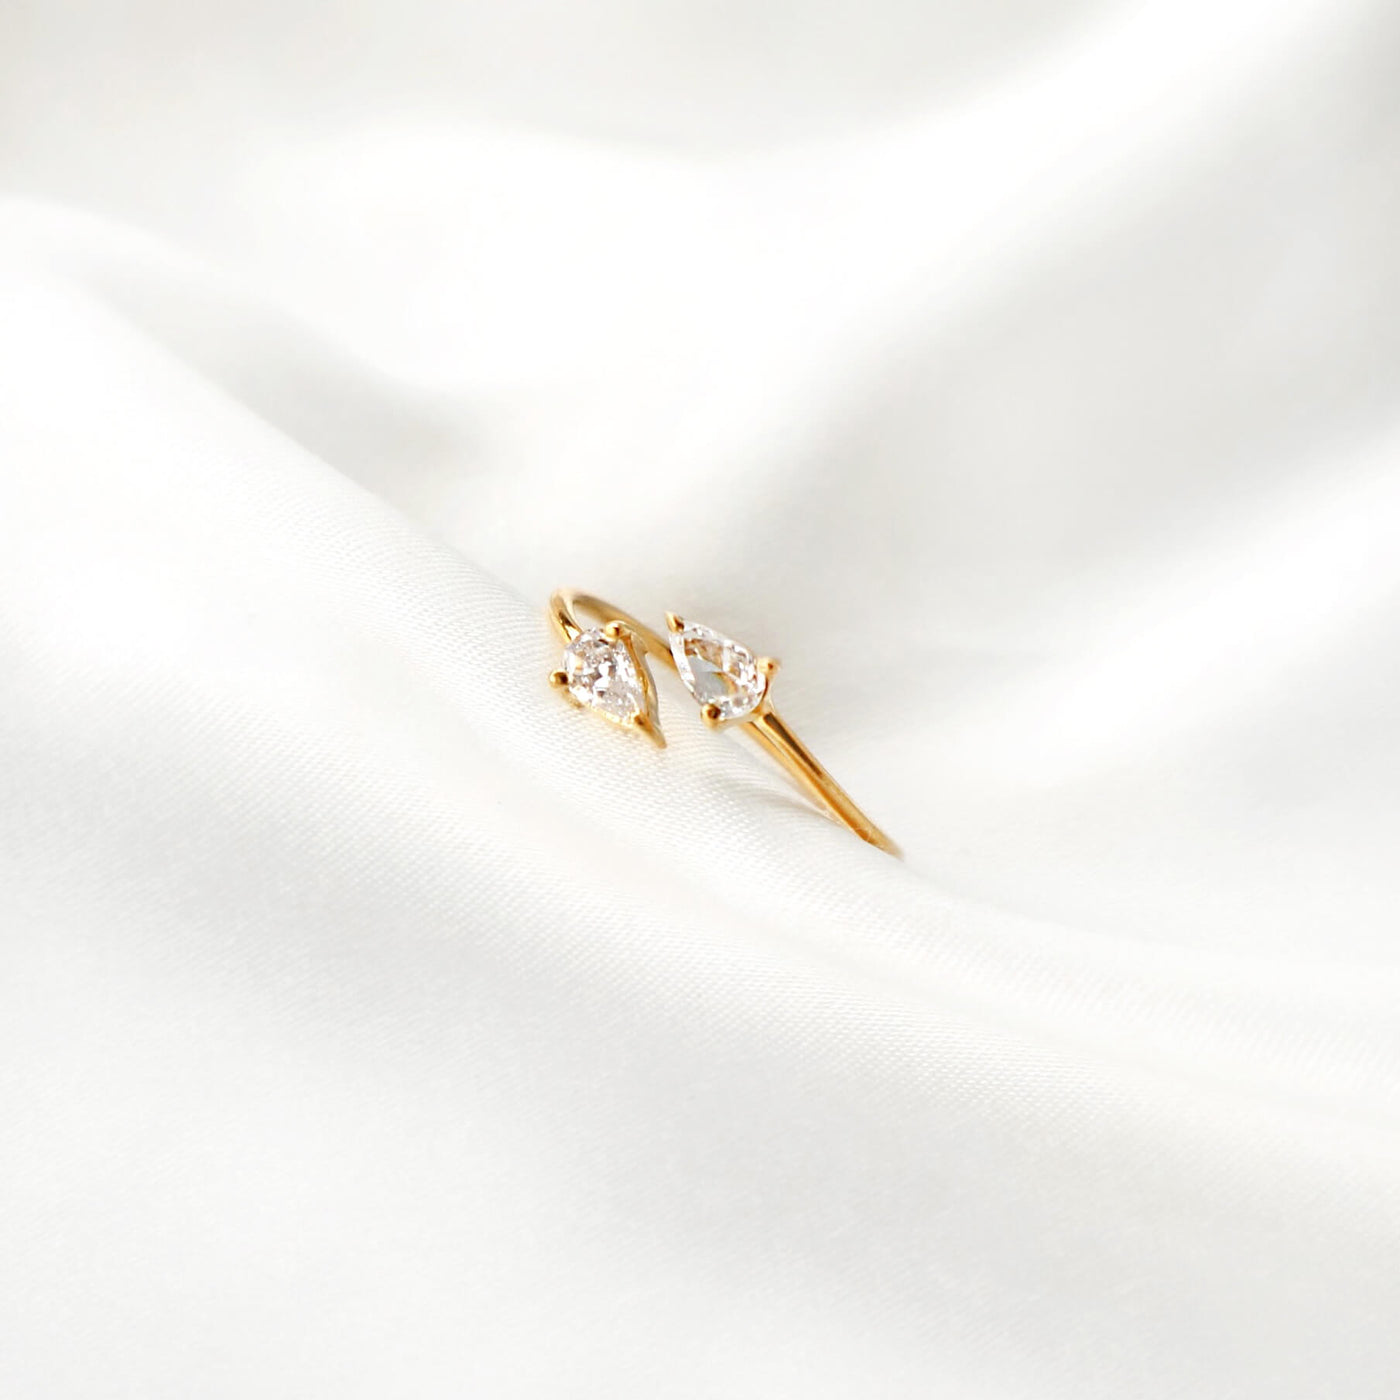 Cubic zirconia teardrop adjustable gold ring, Rani & Co.